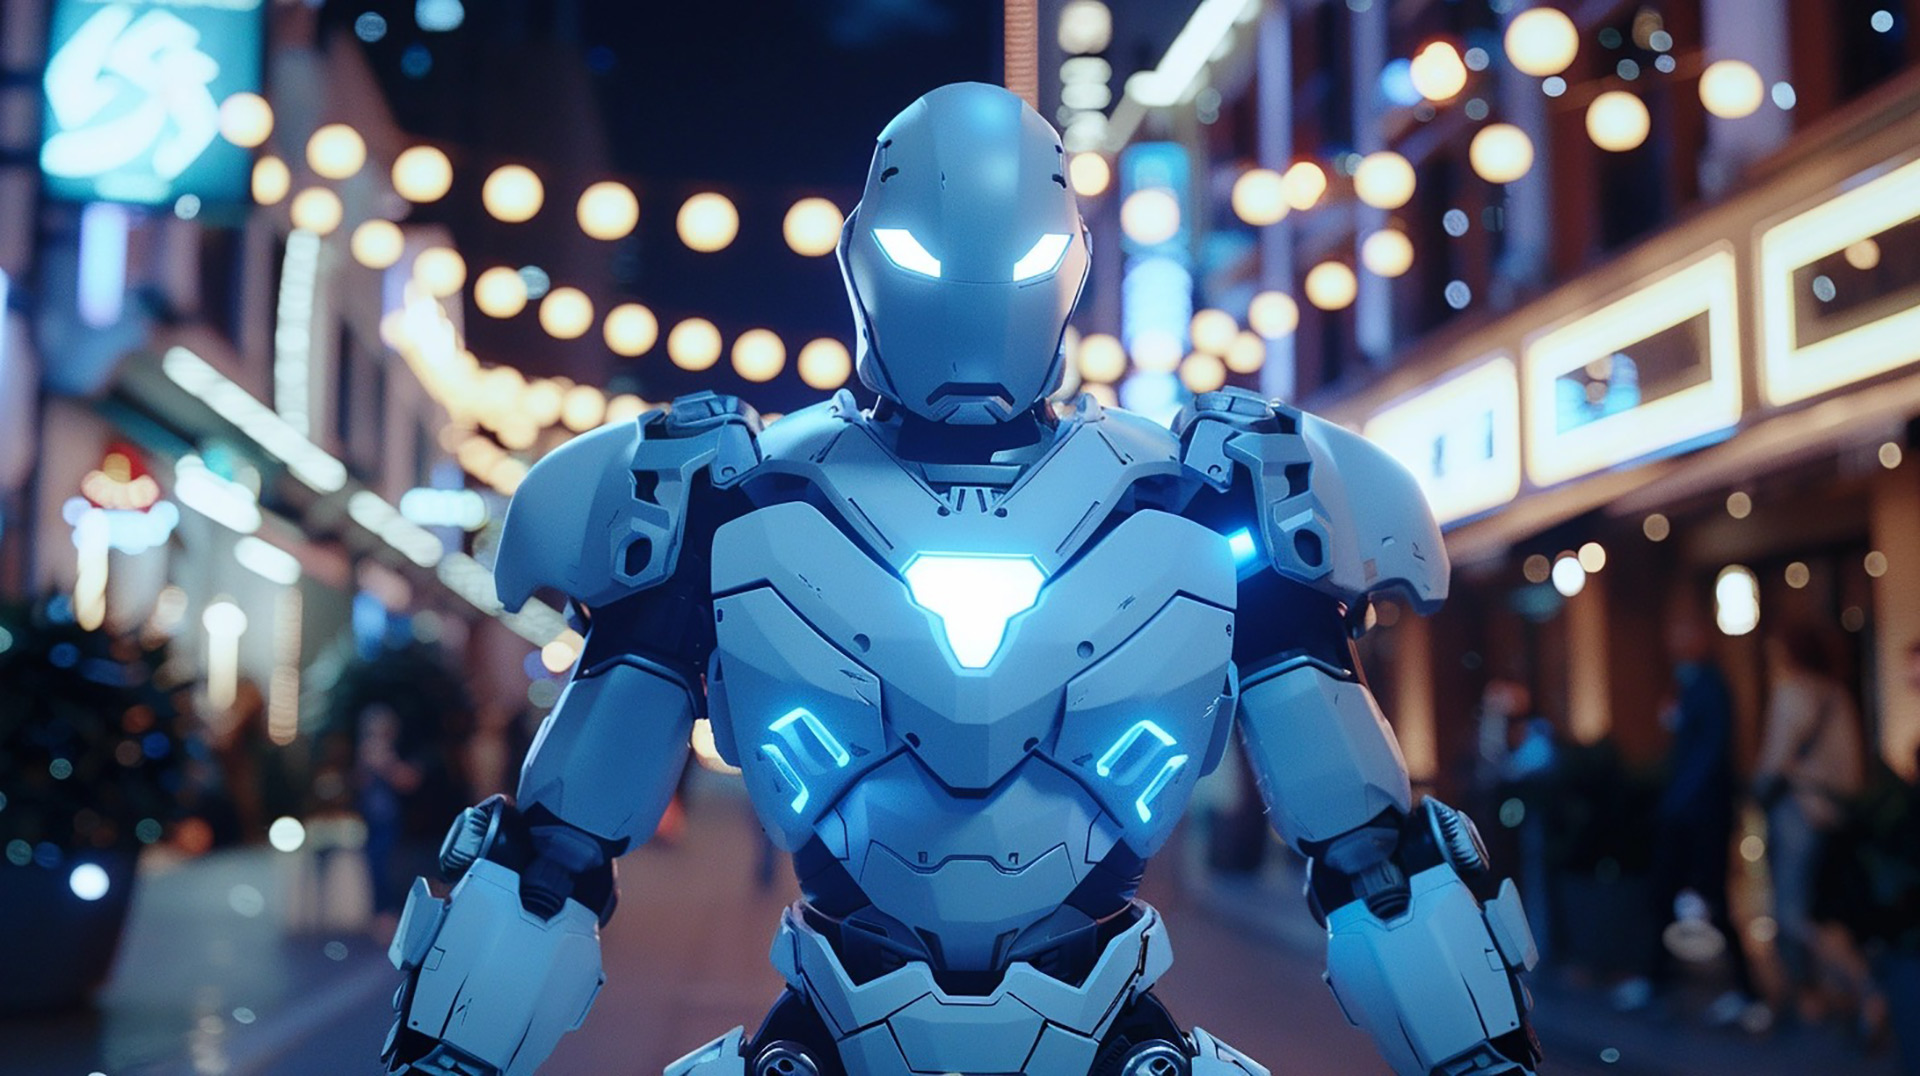 Cyborg Champion: Robot Superman High-Resolution Images